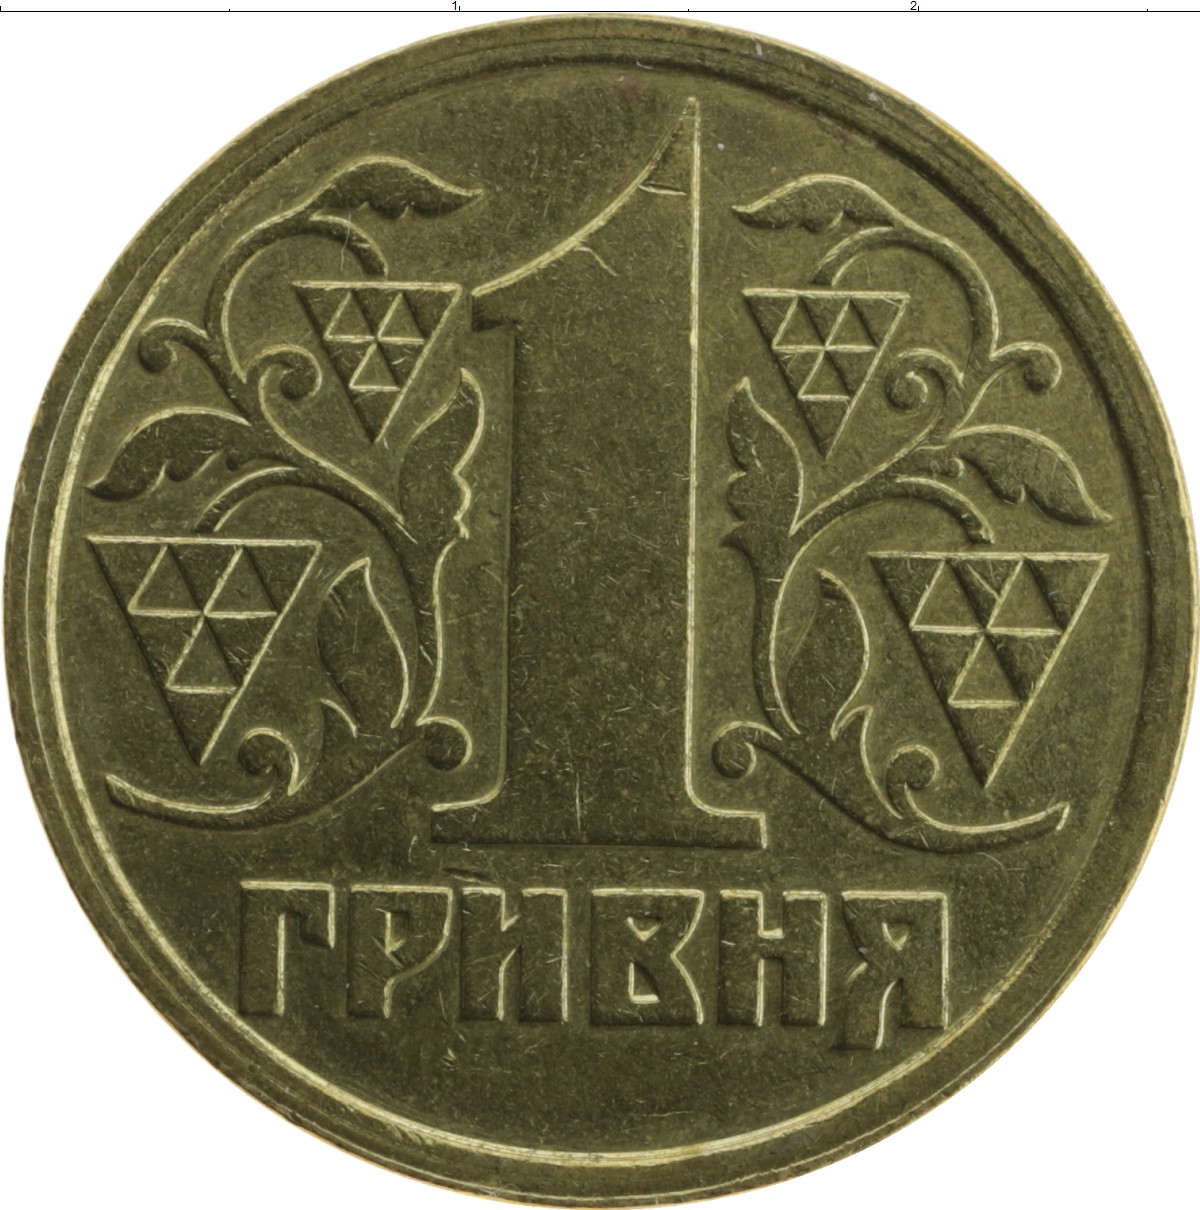 1 гривна стоит 3 рубля 70 копеек. 1 Гривна Украина. Монета Украина 1 гривна. Гривна 1996. Гривны 1996 года.